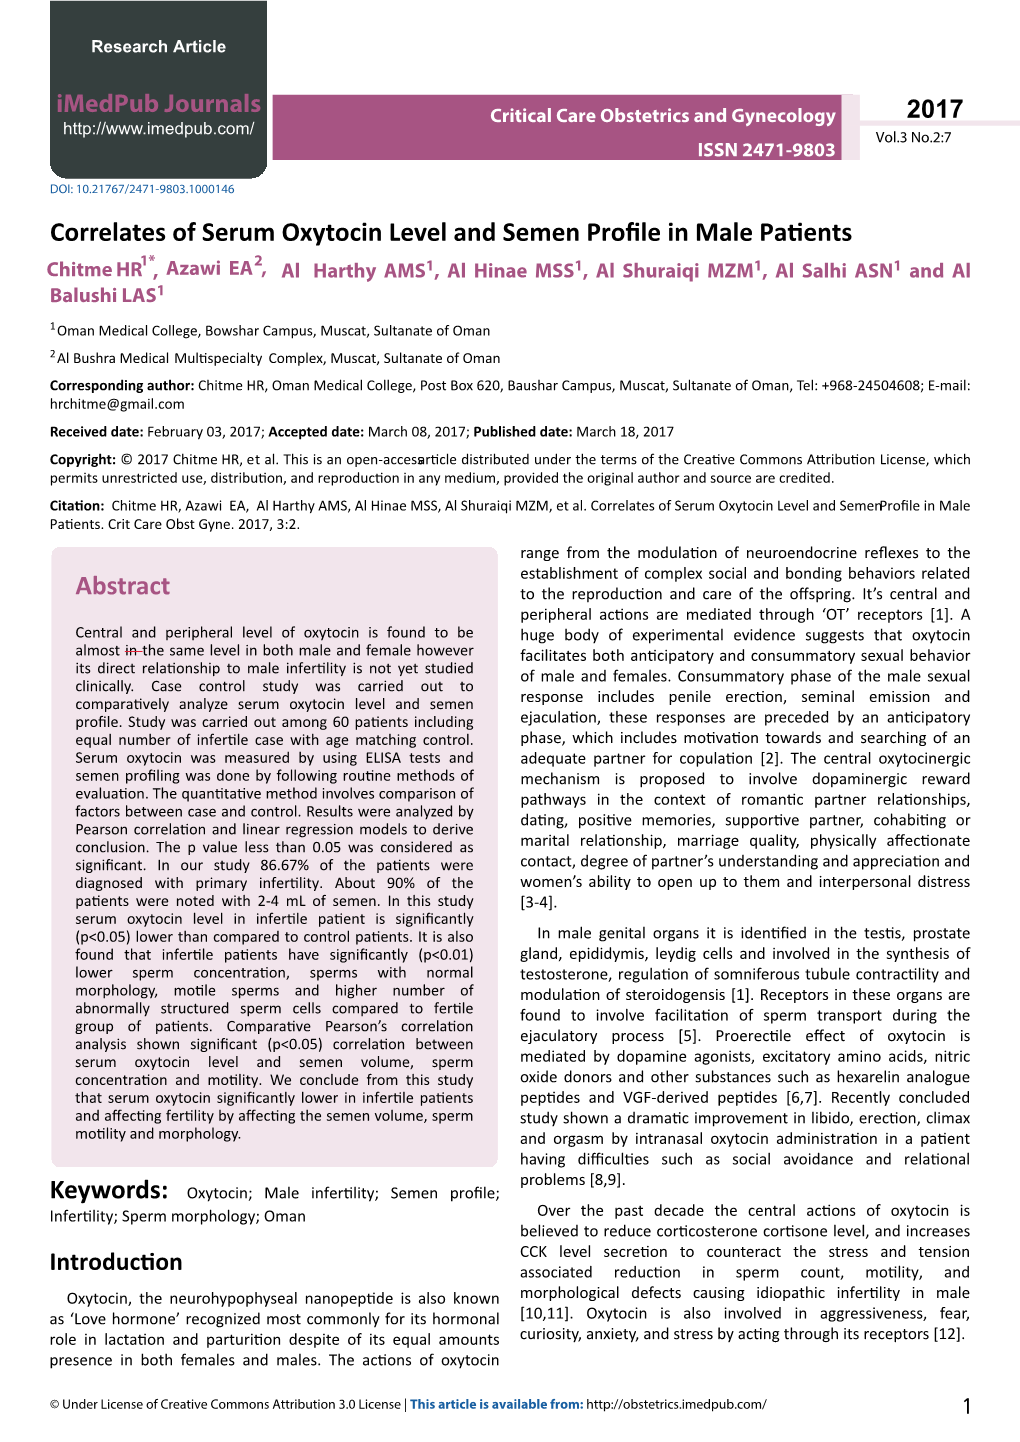 Correlates of Serum Oxytocin Level and Semen Profile in Male Patients